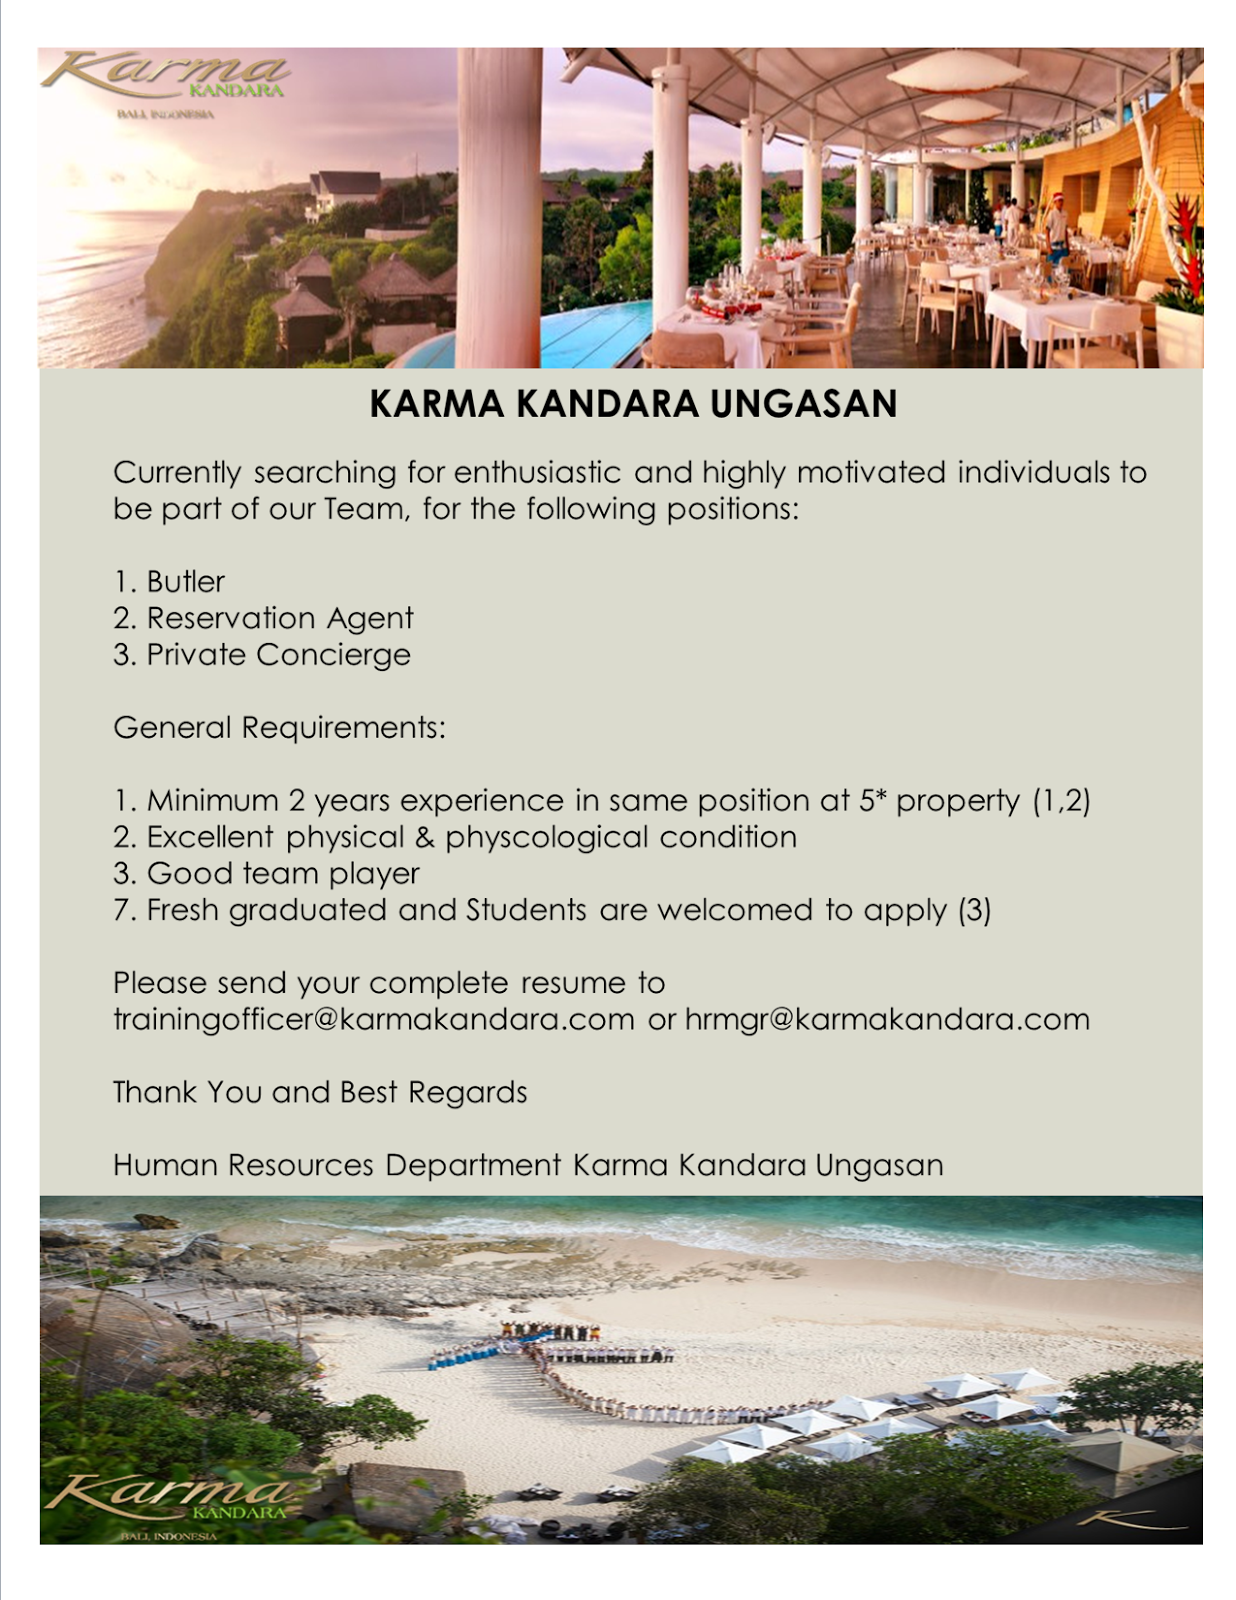 Lowongan Kerja Hotel Bali  Share The Knownledge